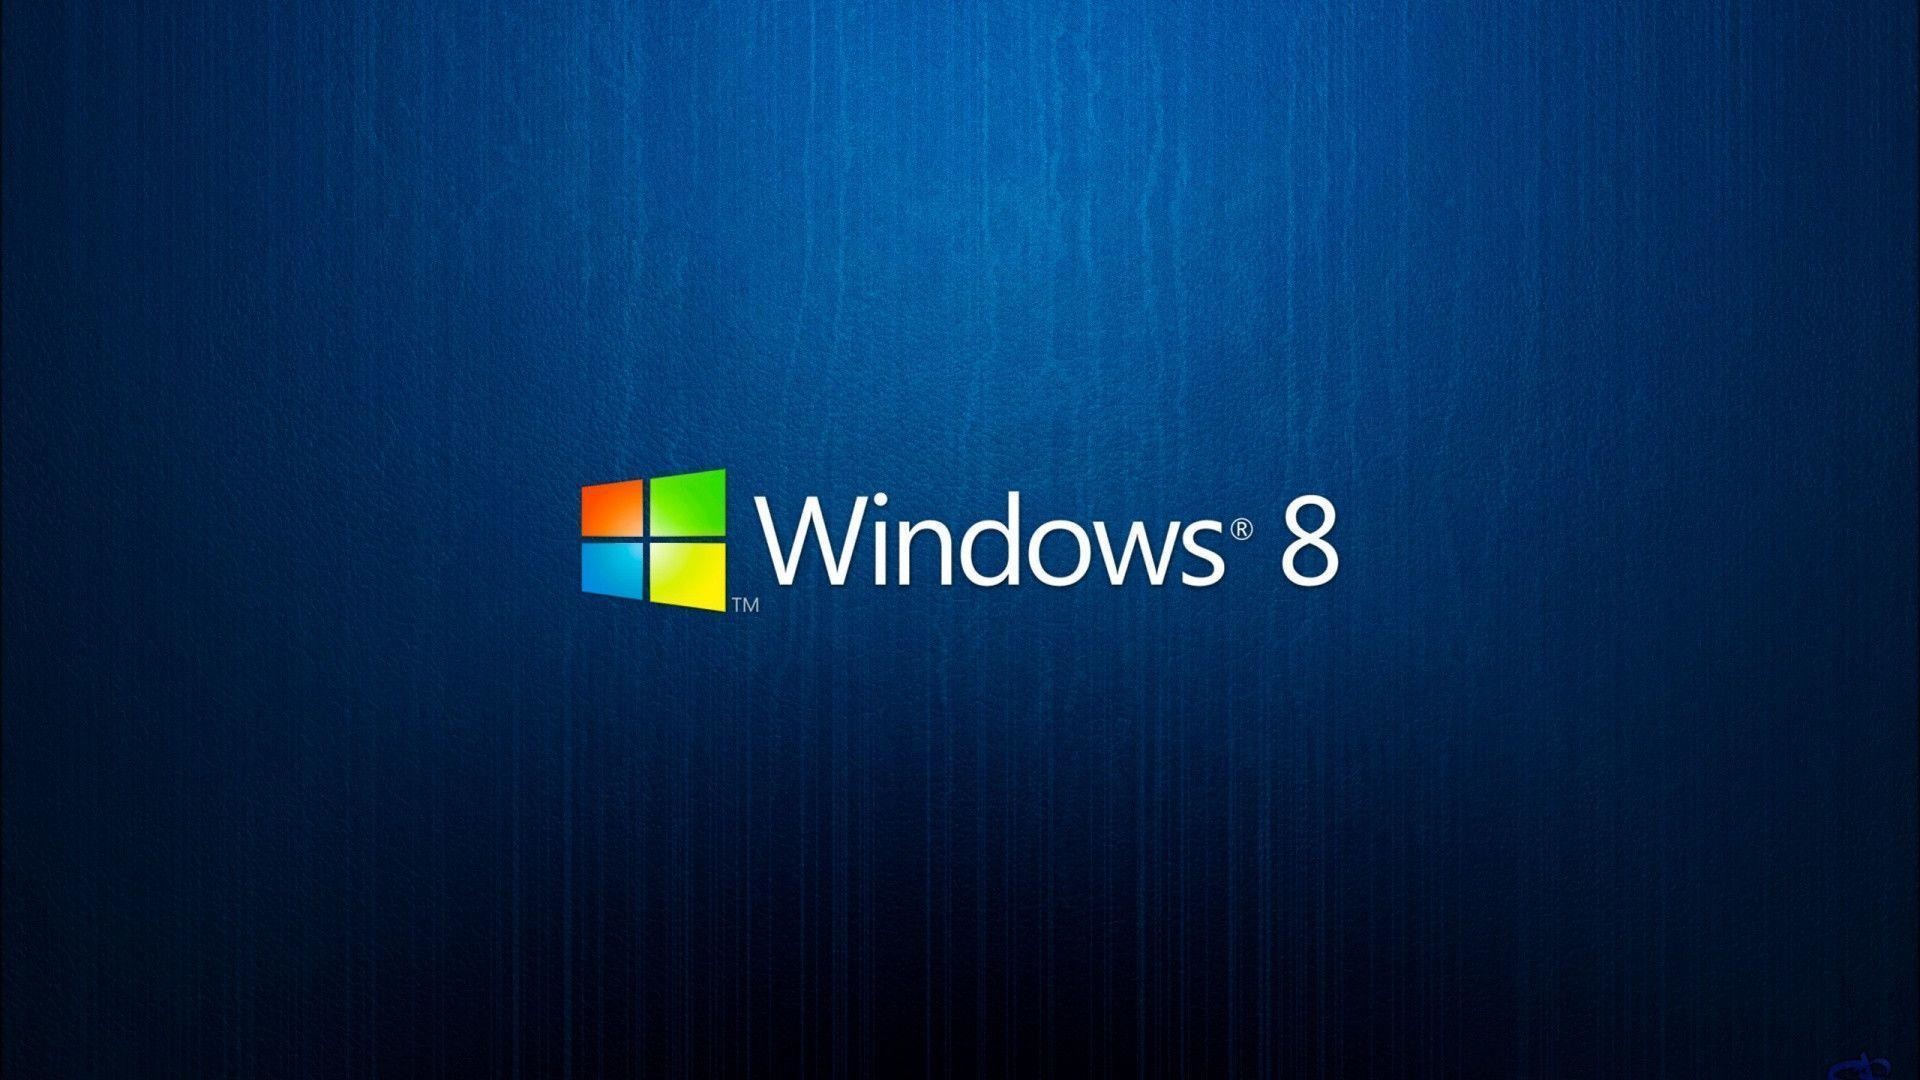 Windows 8 Wallpaper 1920x1080 78 Pictures